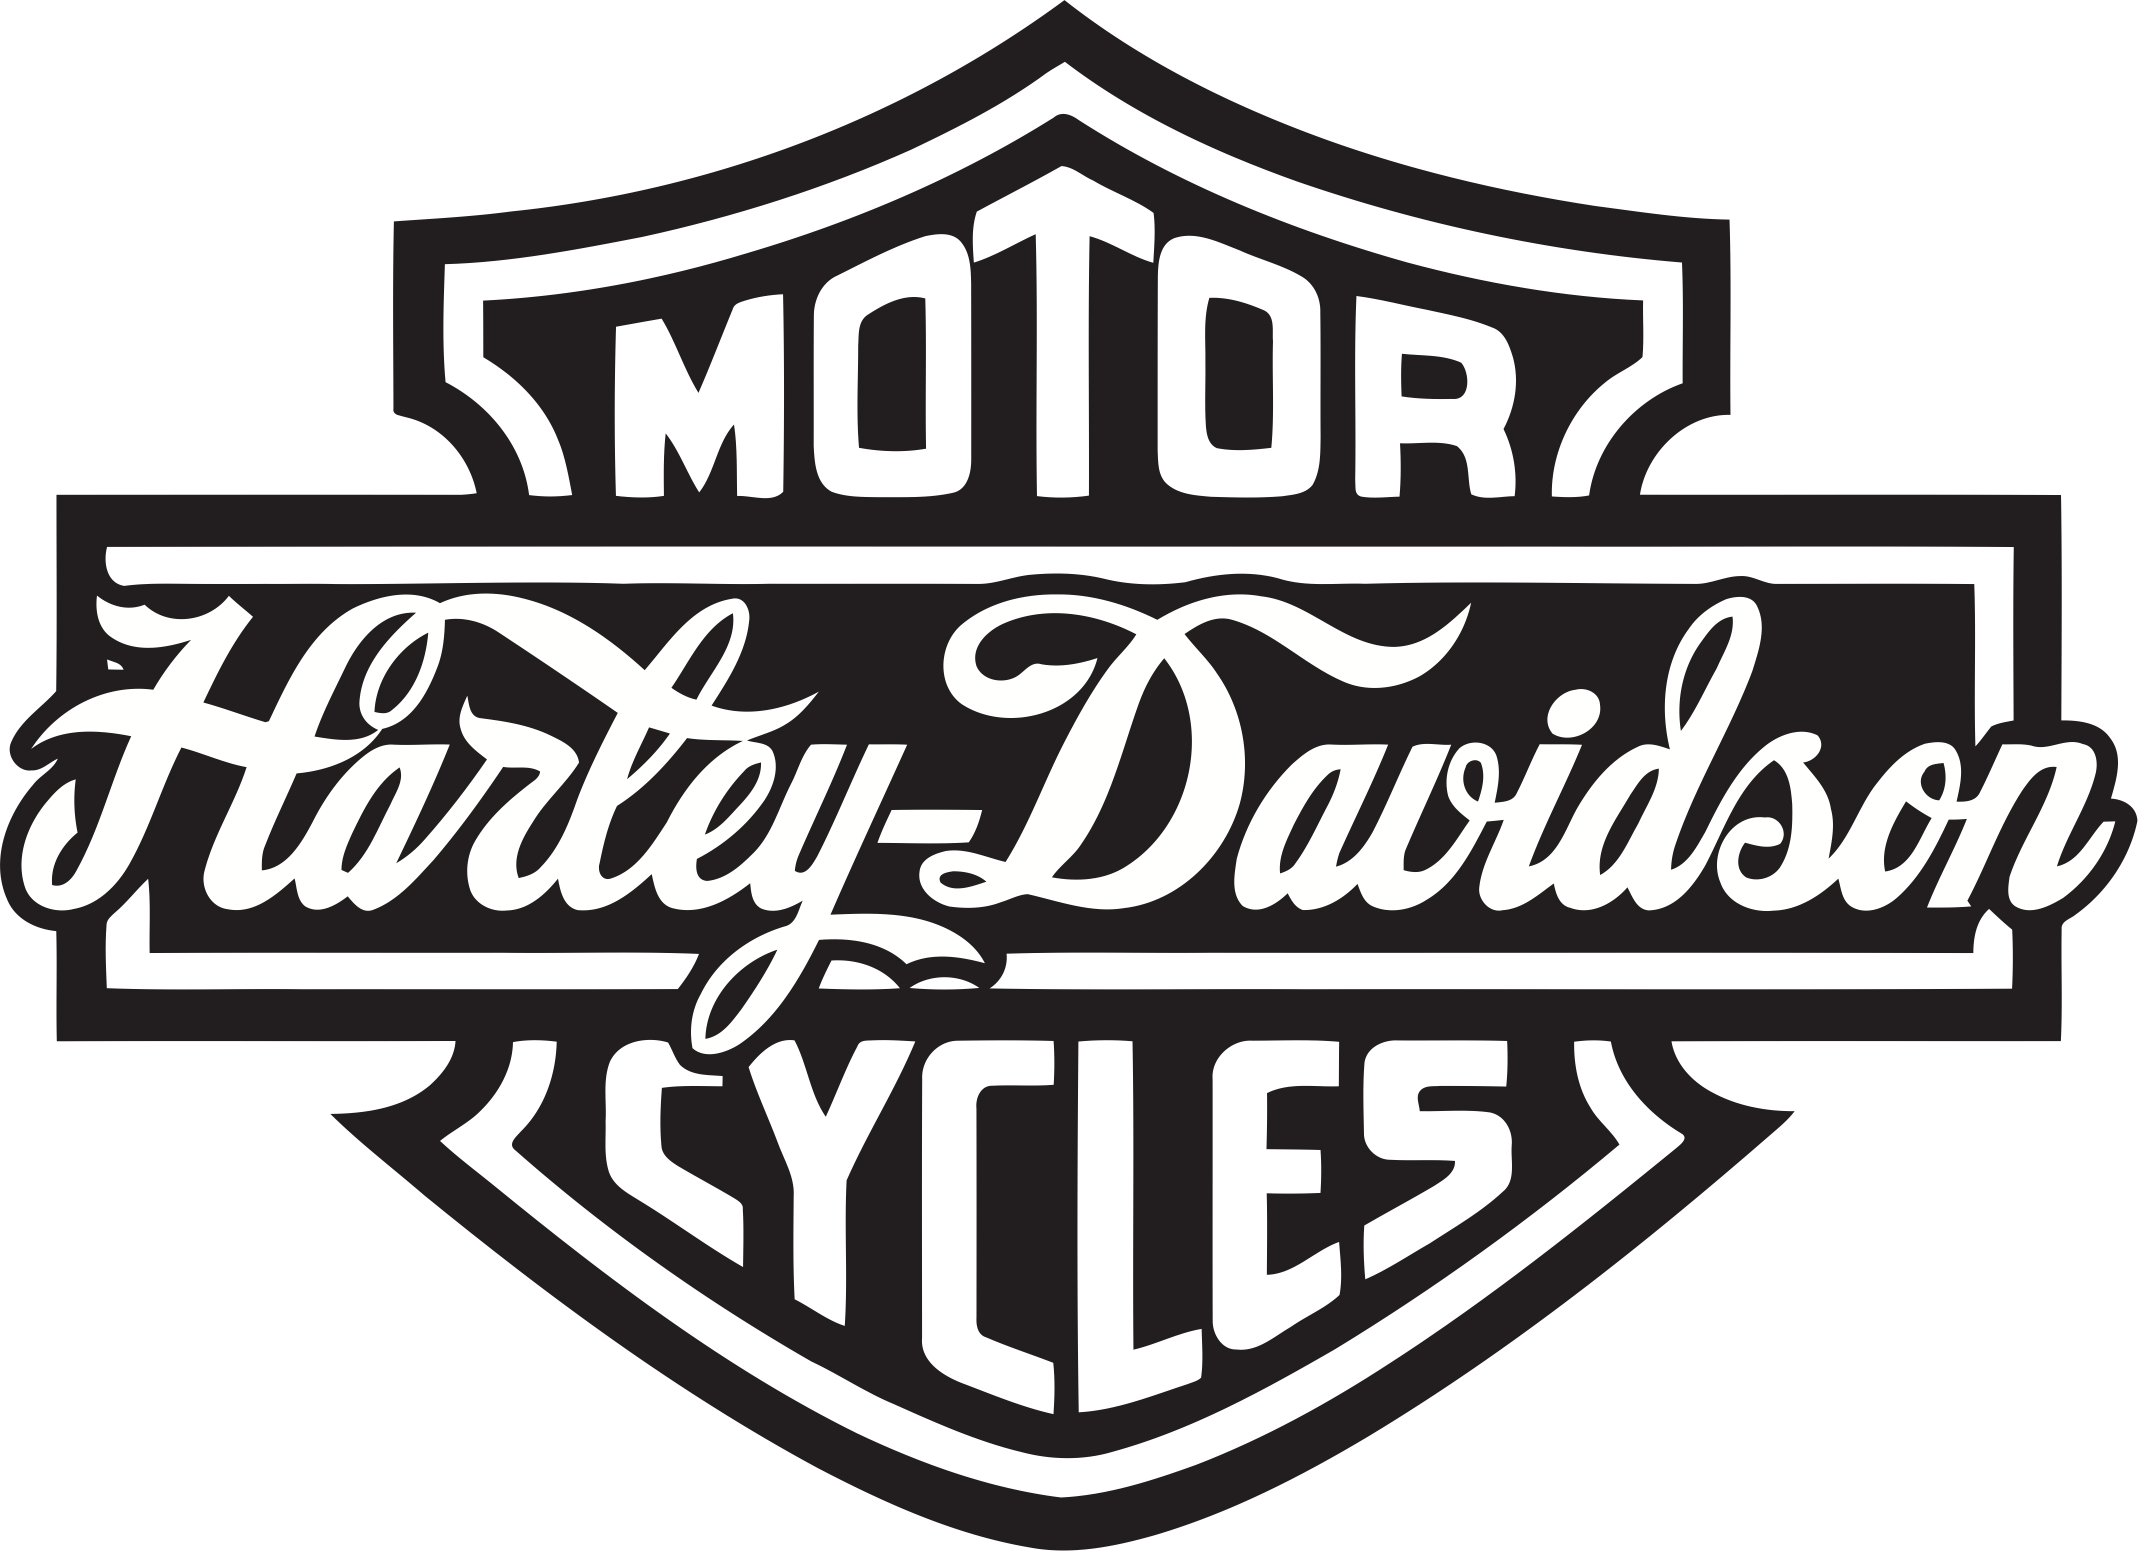 Harley Davidson logotipo PNG imagem transparente | PNG Arts